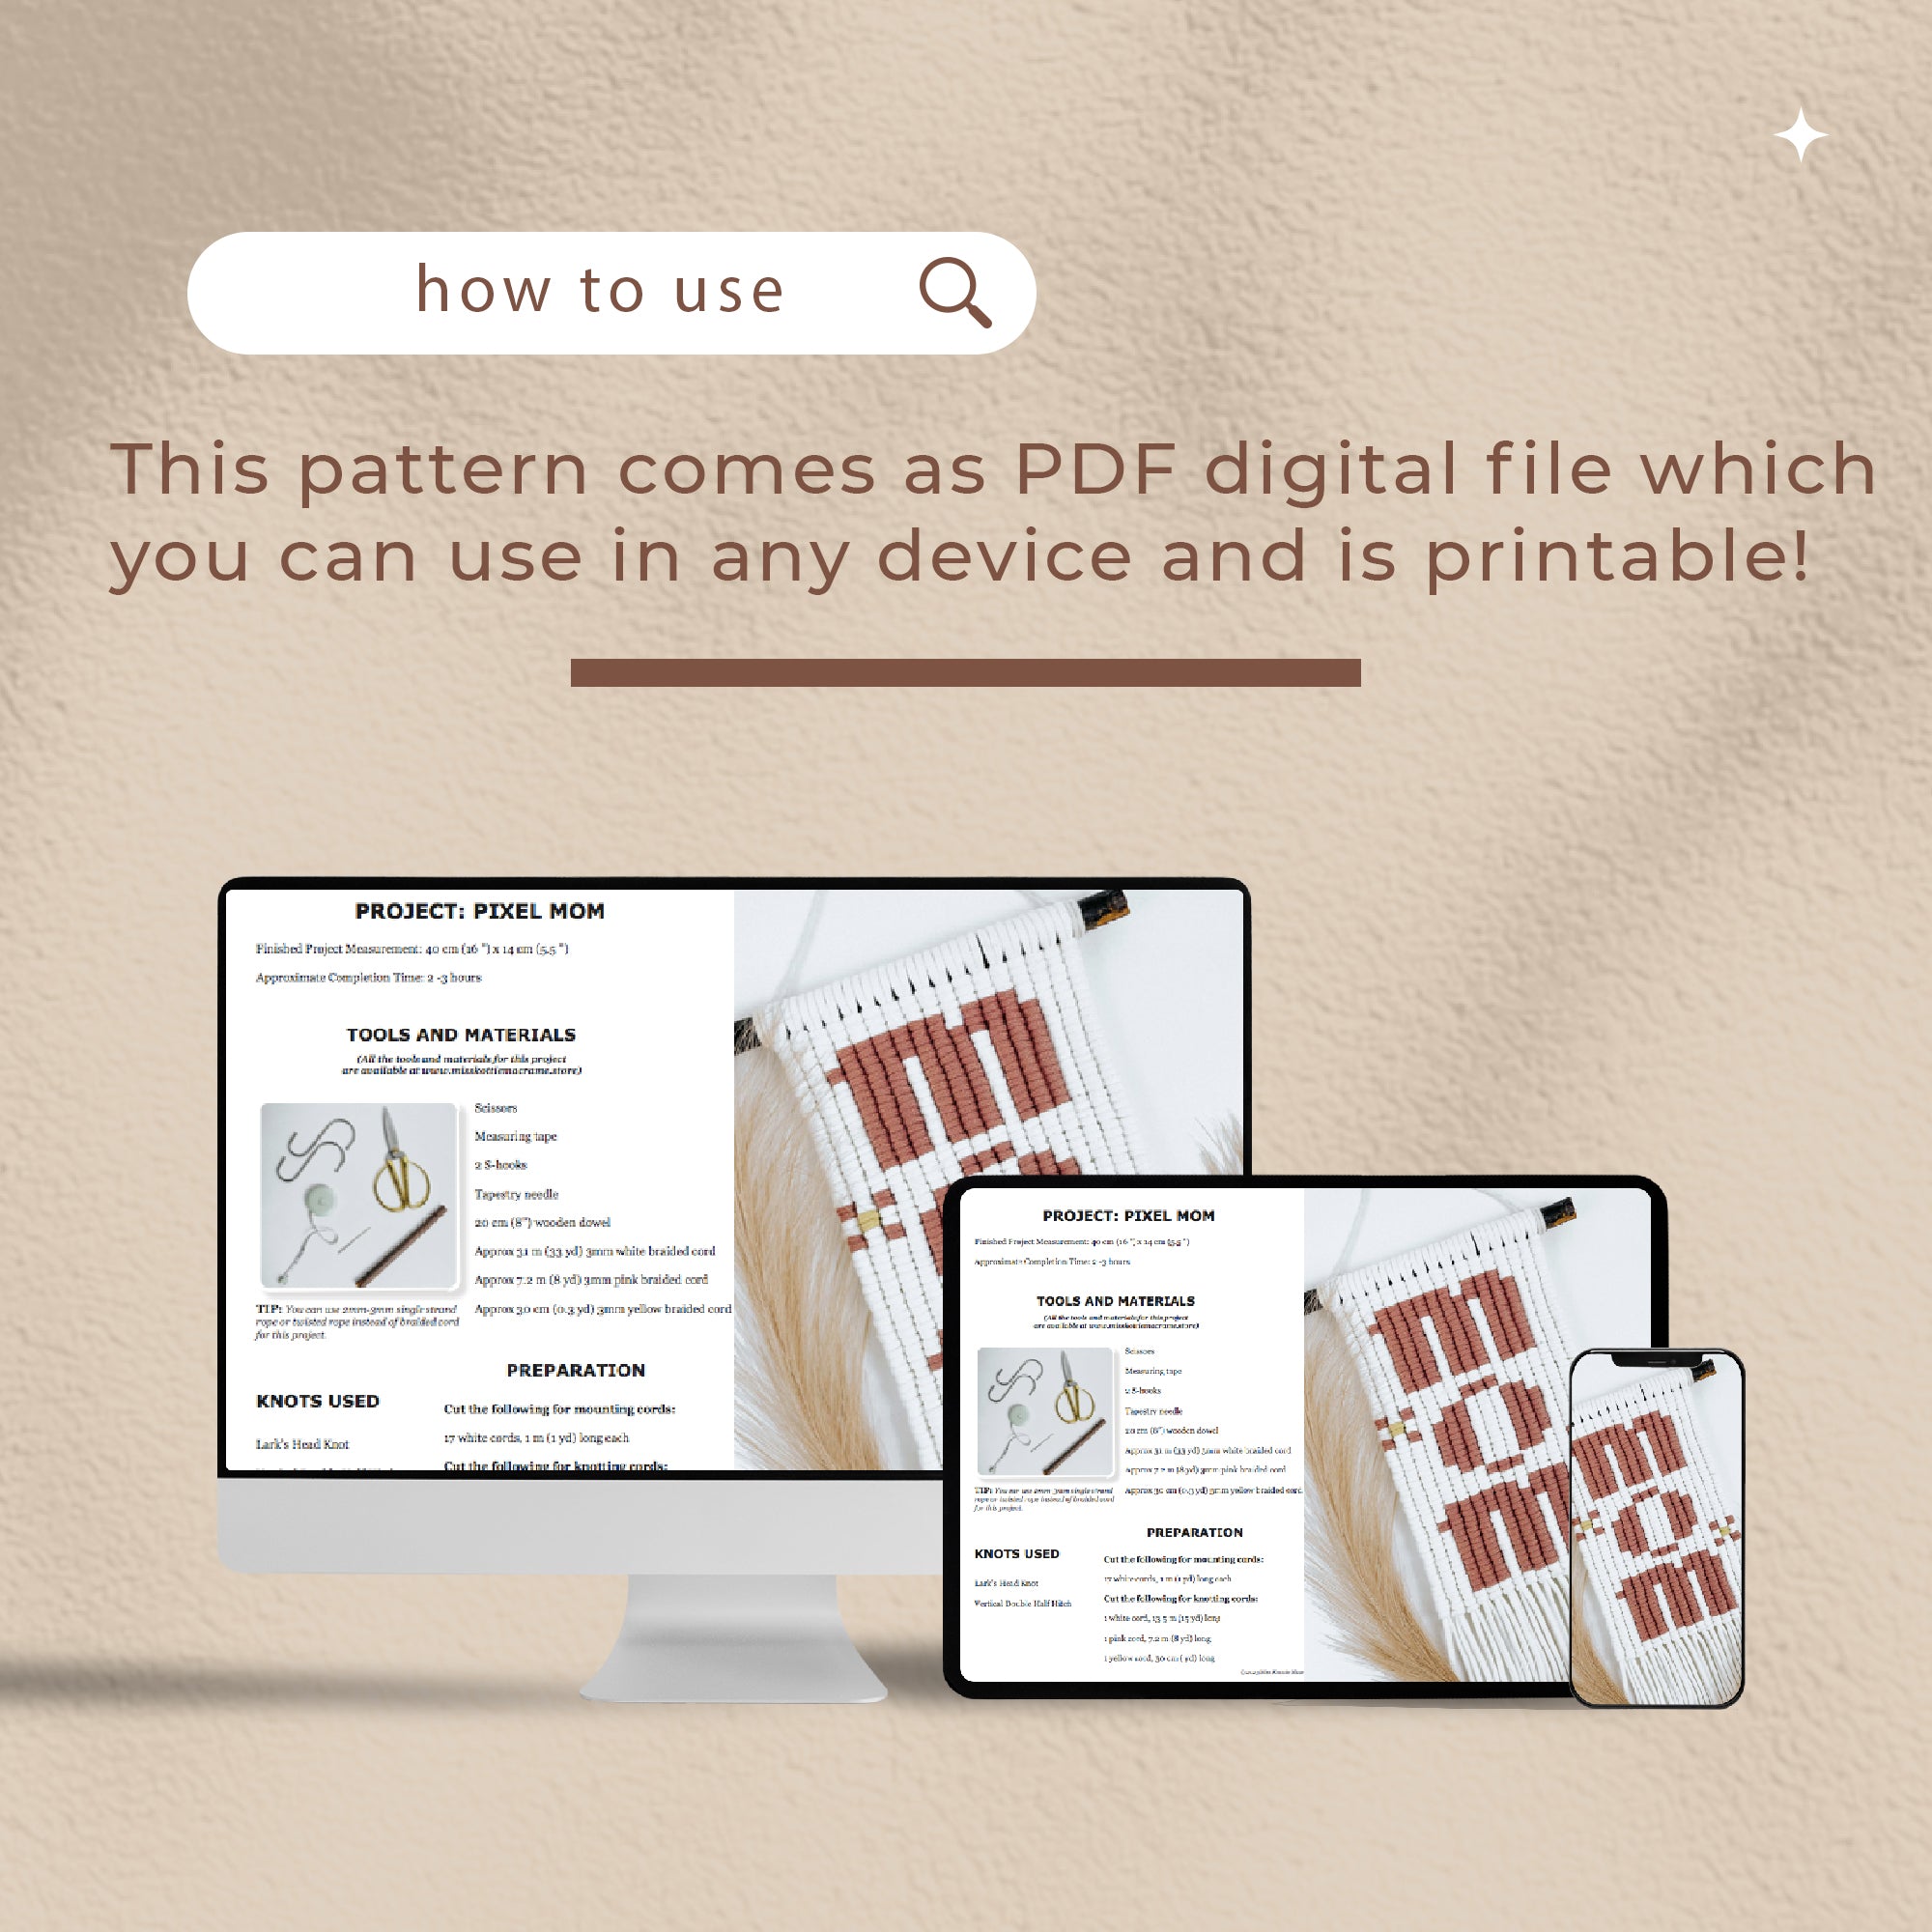 PIXEL MOMパターン-PDFとノットガイドを作成